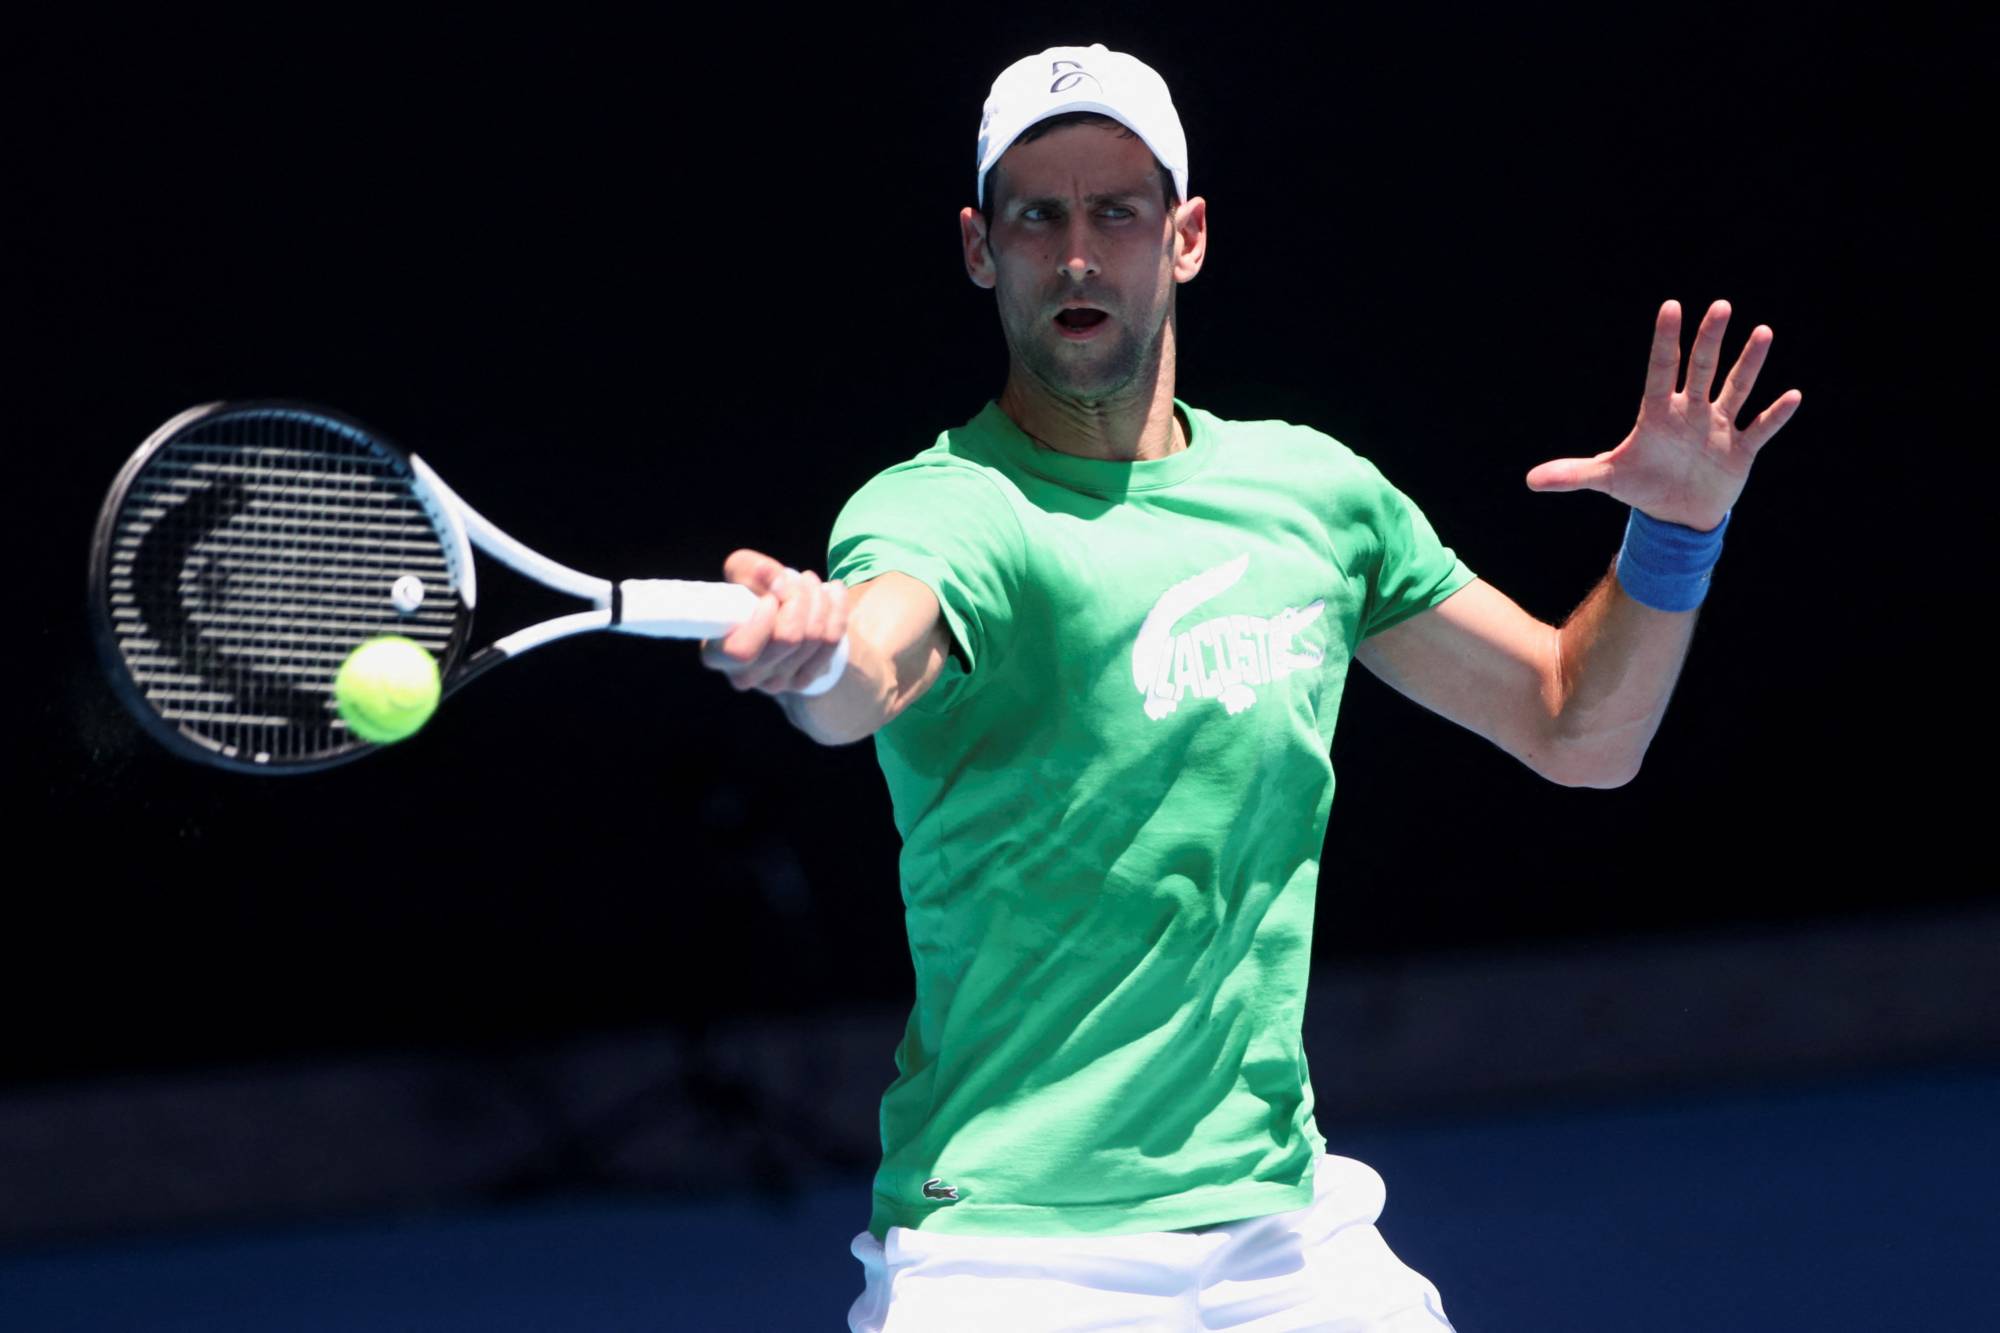 Australian Government cancels Djokovic’s visa again ahead of Australian Open